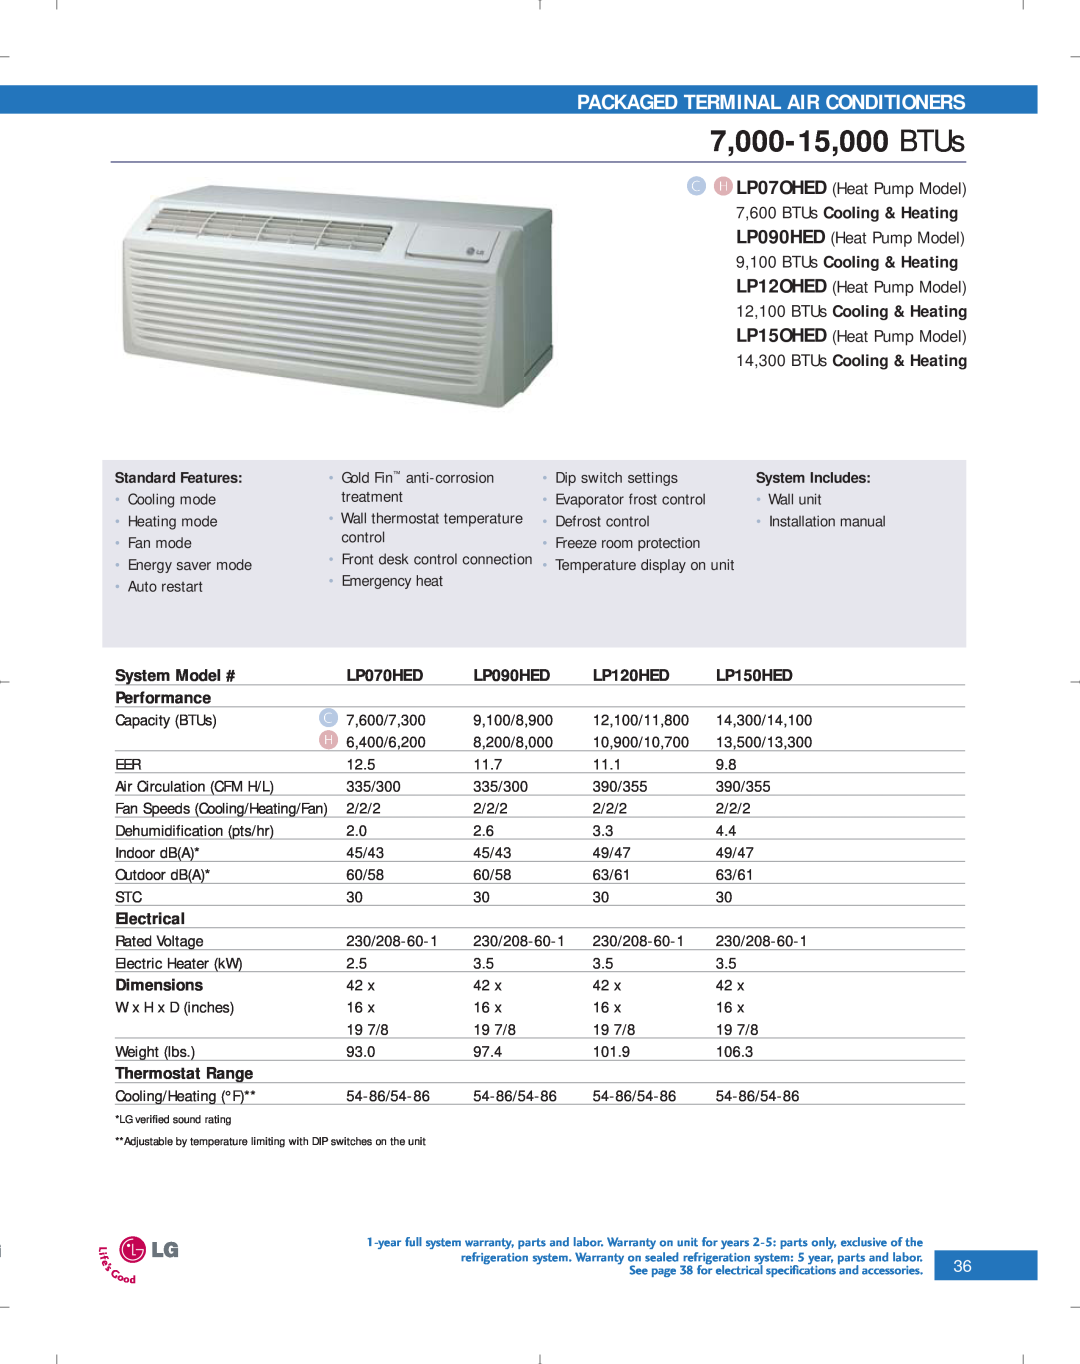 LG Electronics PG-100-2006-VER3 9,100 BTUs Cooling & Heating, 12,100 BTUs Cooling & Heating, LP070HED, LP120HED, LP150HED 